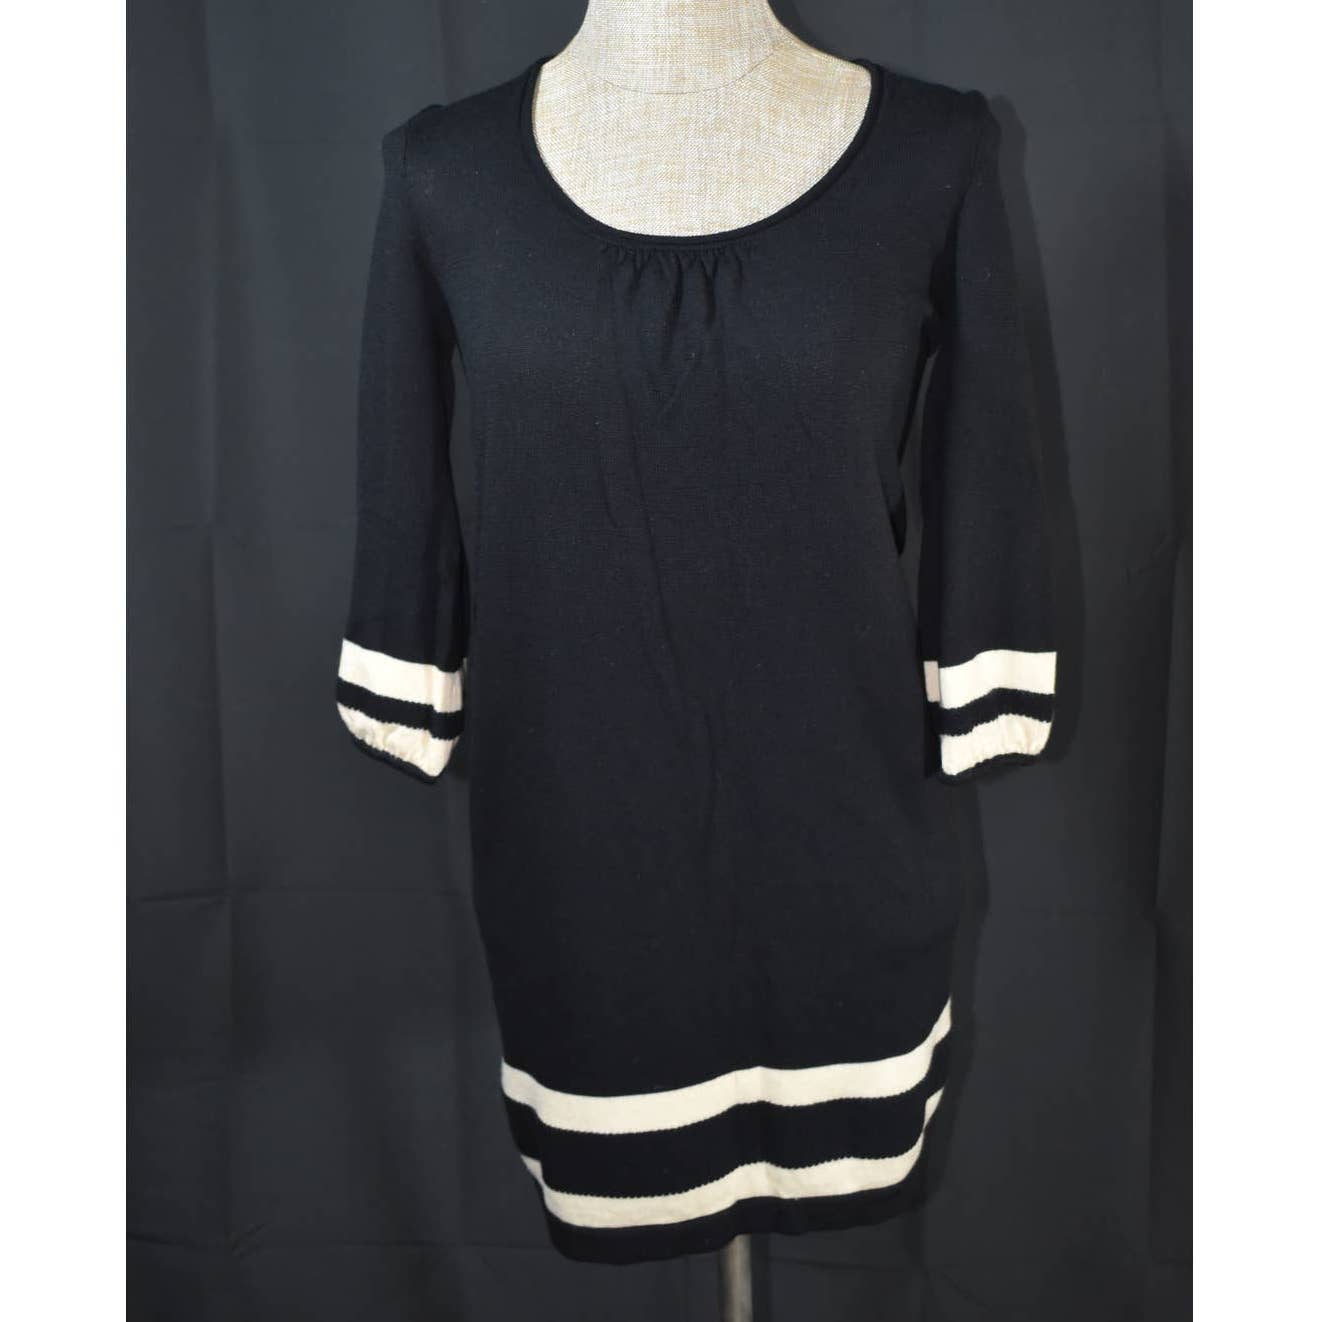 Lilly Pulitzer 100% Merino Wool 3/4 Sleeve Sweater Dress- S